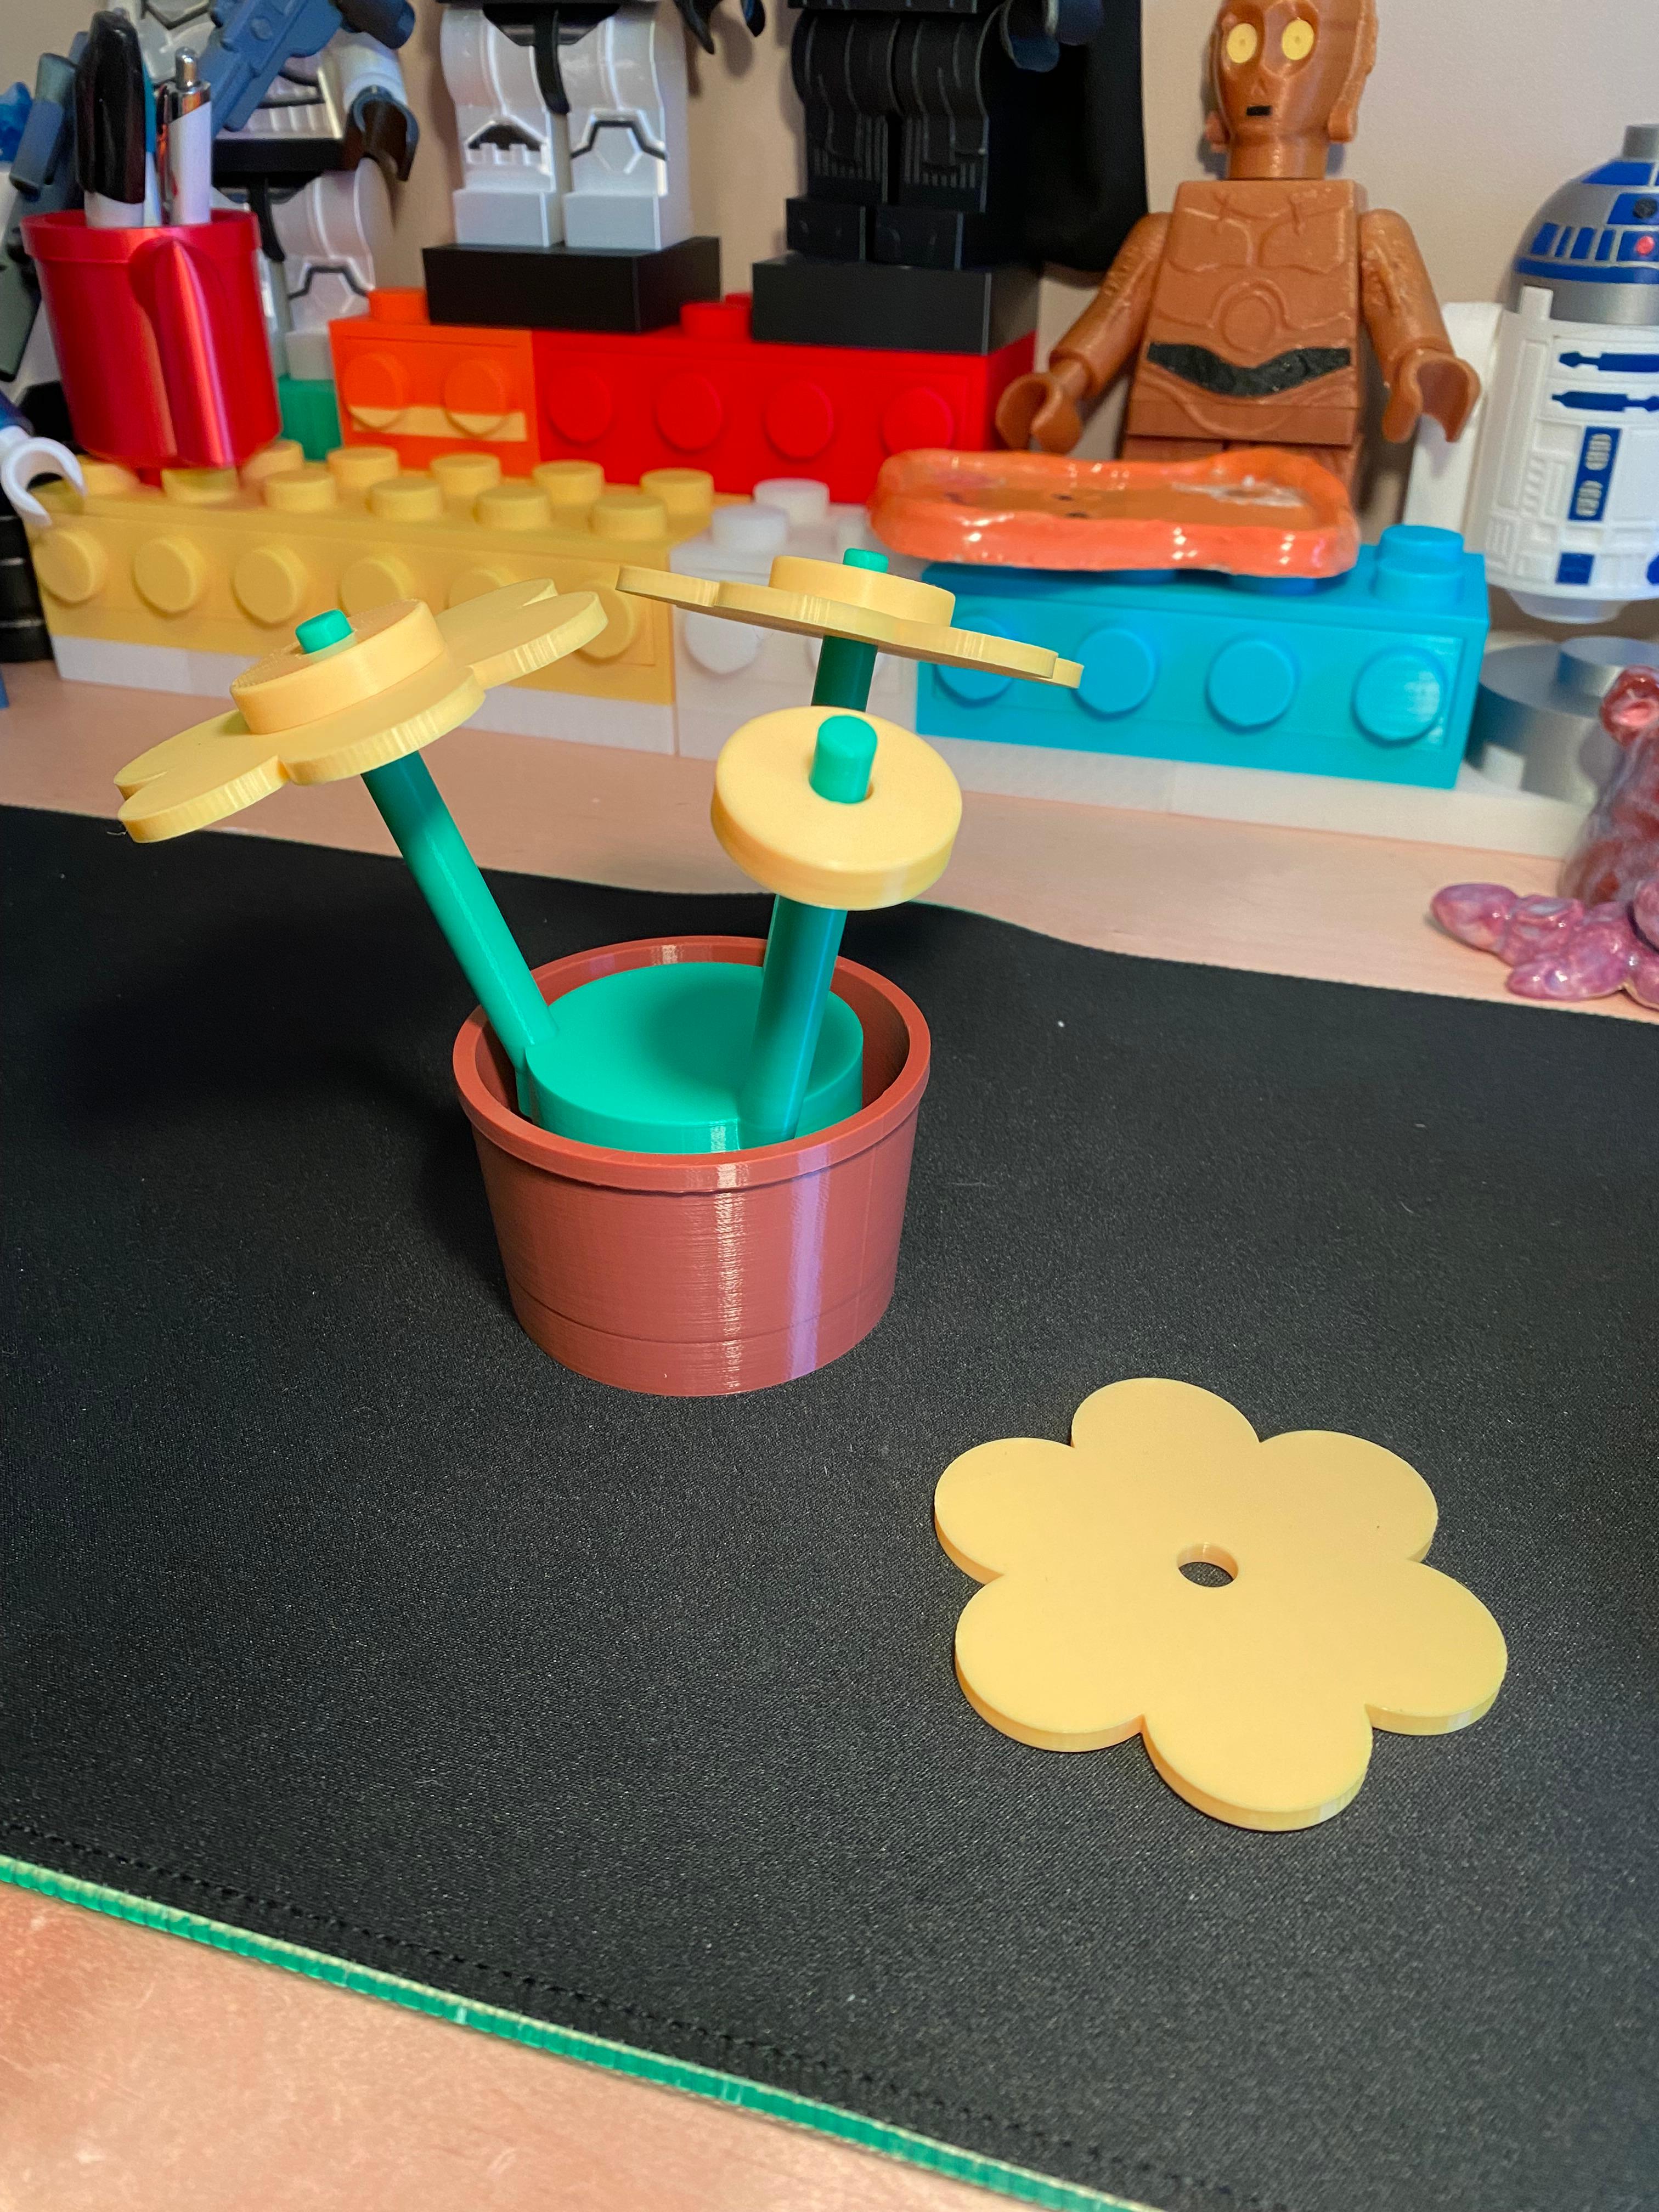 Brick Flower Coaster Set 3d model